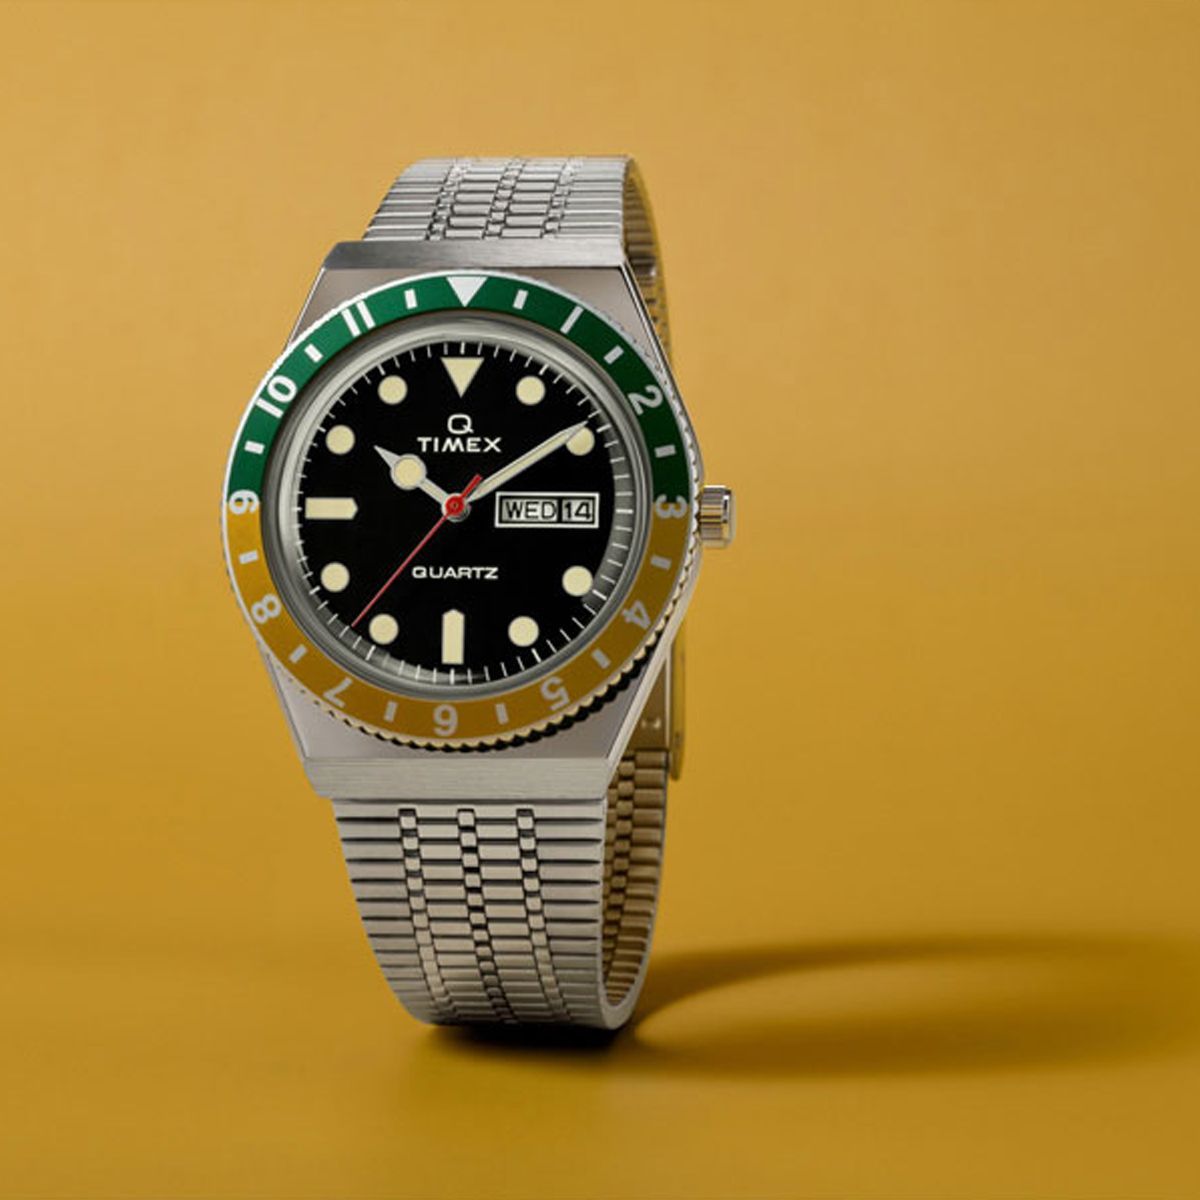 Timex Q 1979 ウォッチ グリーン／ブラック腕時計(アナログ) - www ...